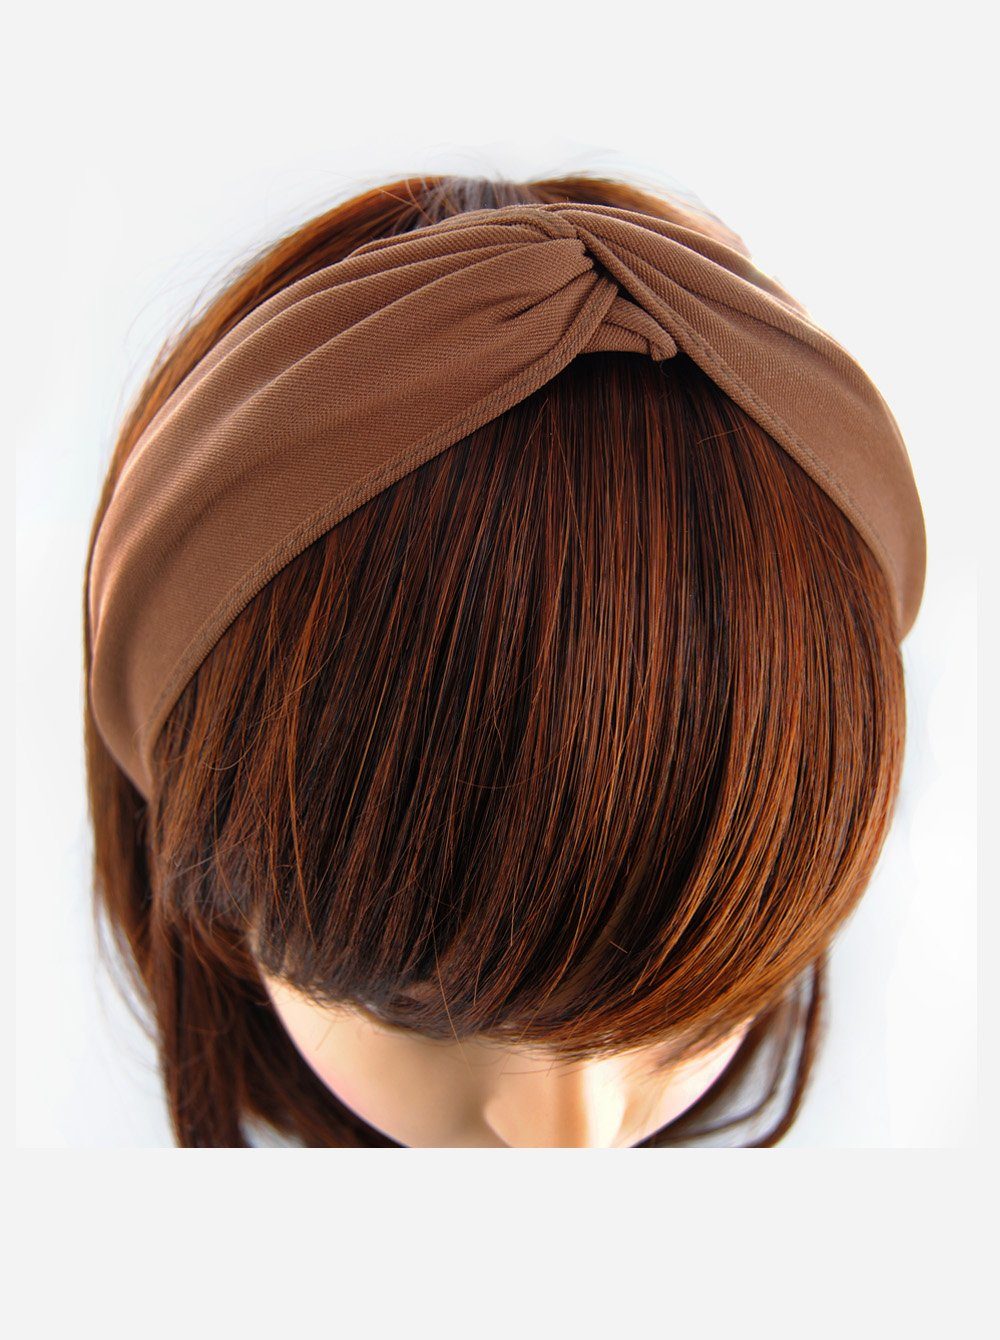 axy Haarreif Breiter Haarreif mit raffinierten Knoten, Vintage Klassik-Look Damen Haareifen Haarband Braun